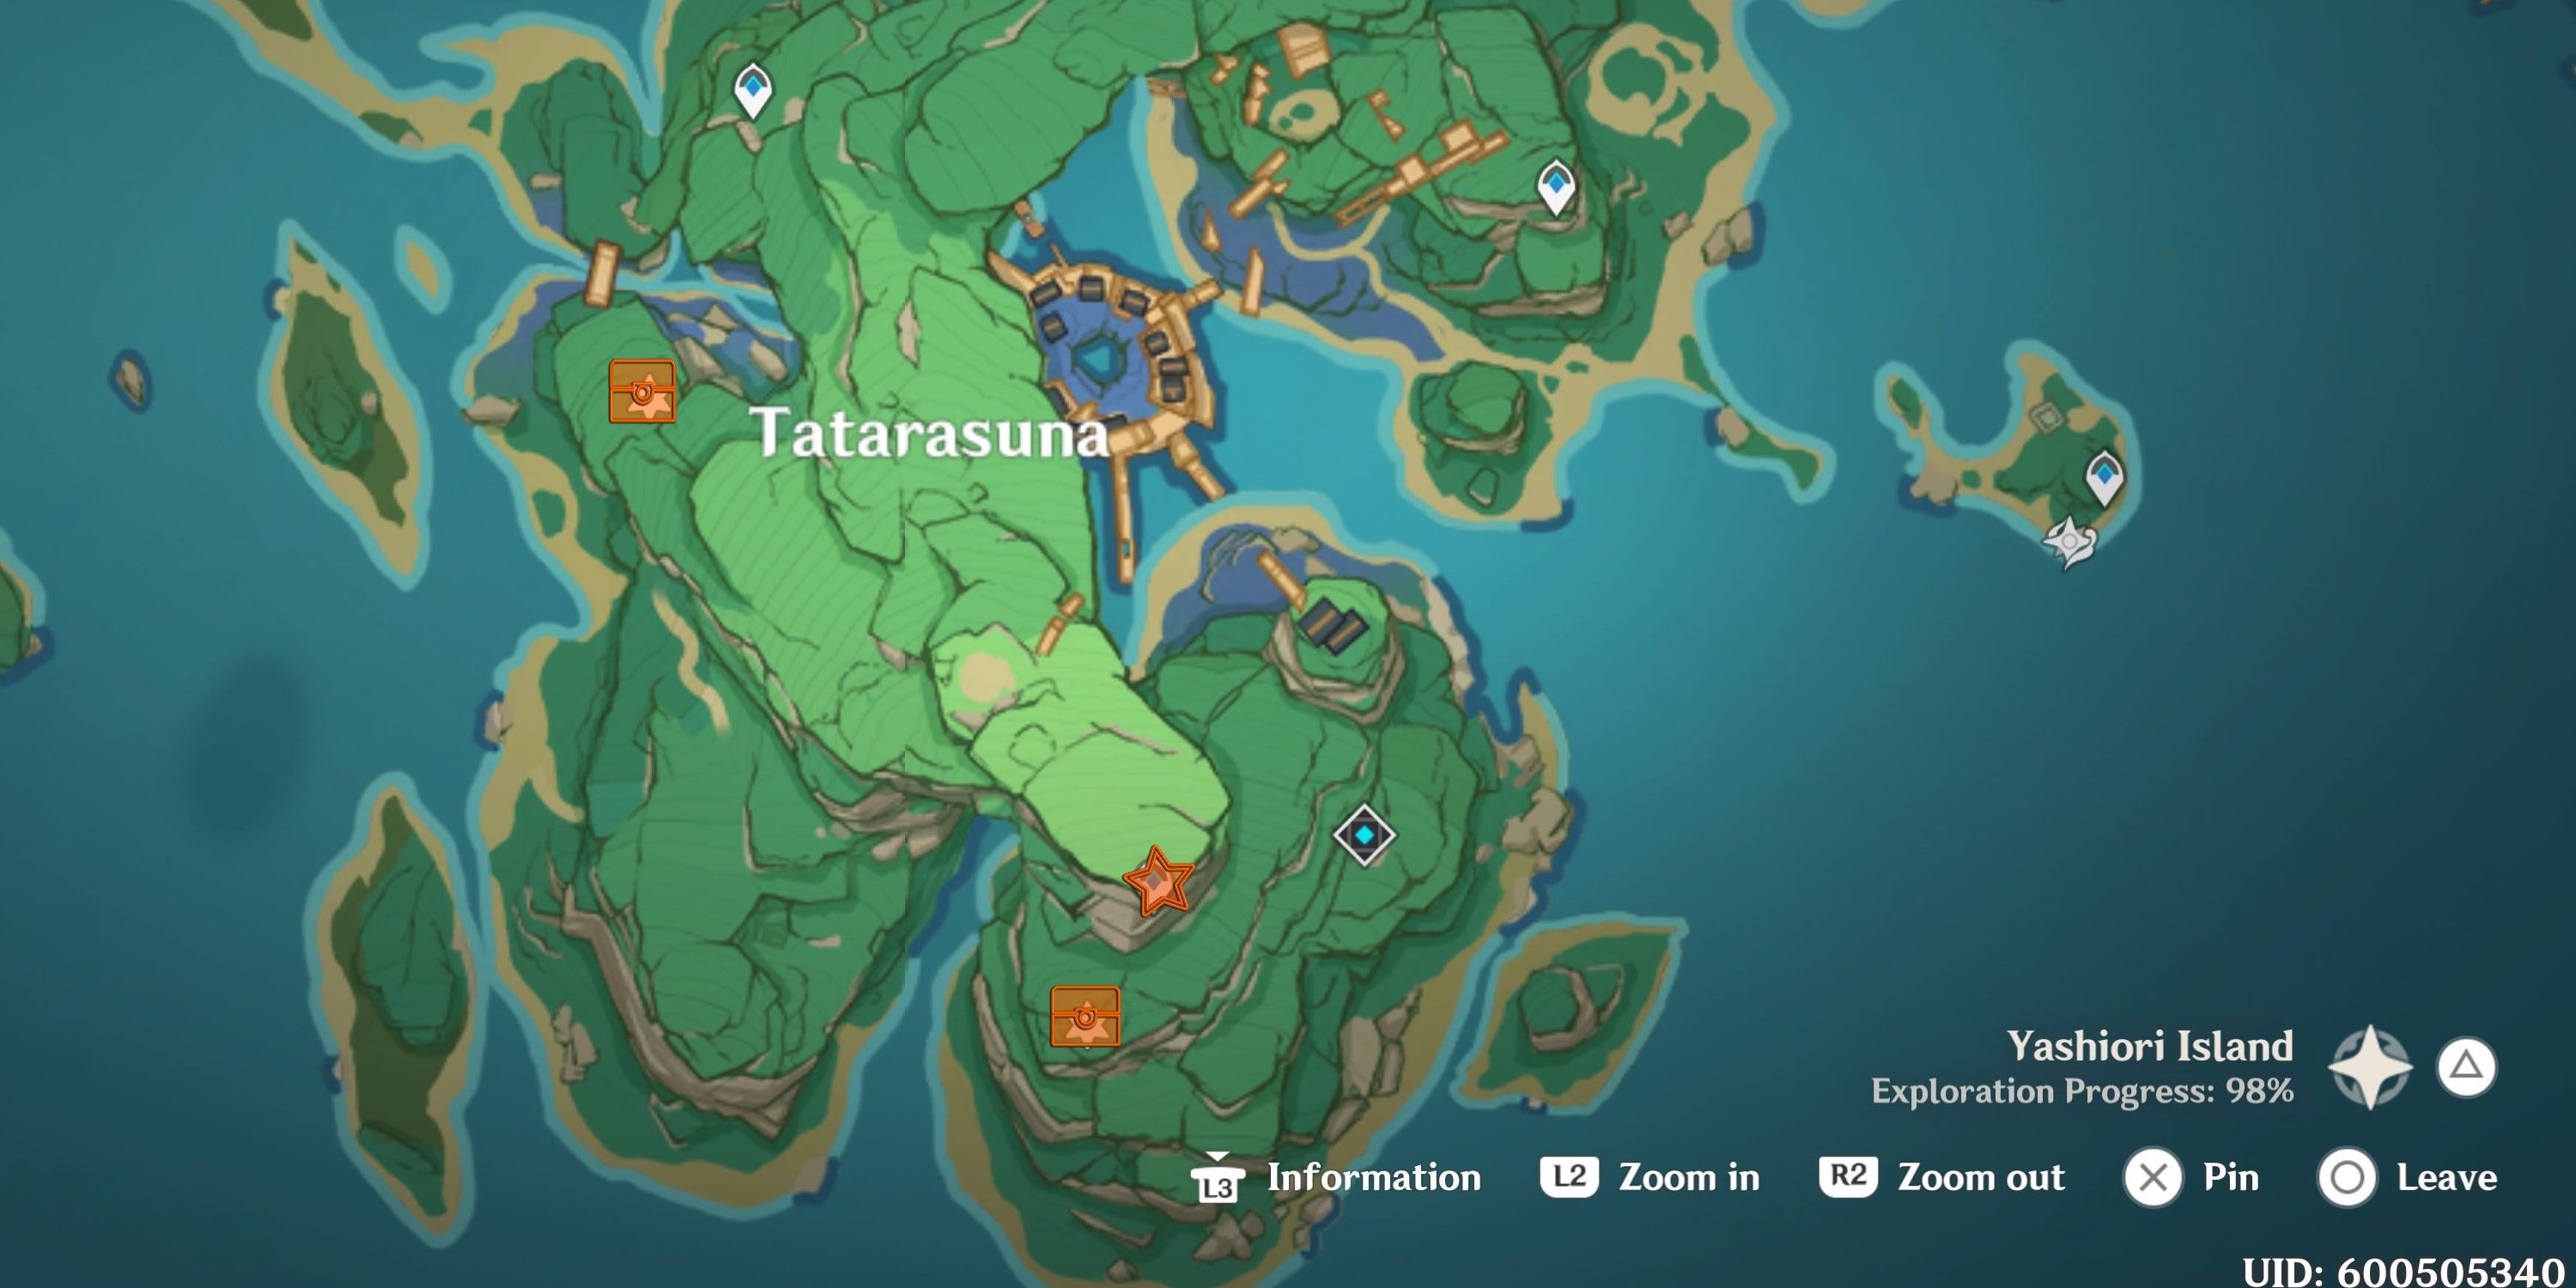 Genshin Impact Shrine of Depths Kannazuka Island, the map shows highlighted areas